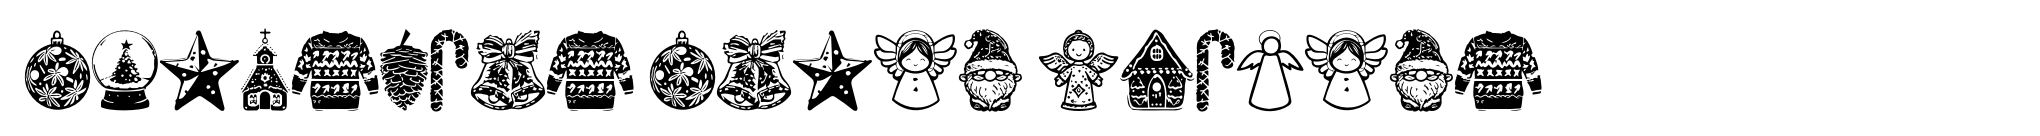 Christmas Carol Symbols image